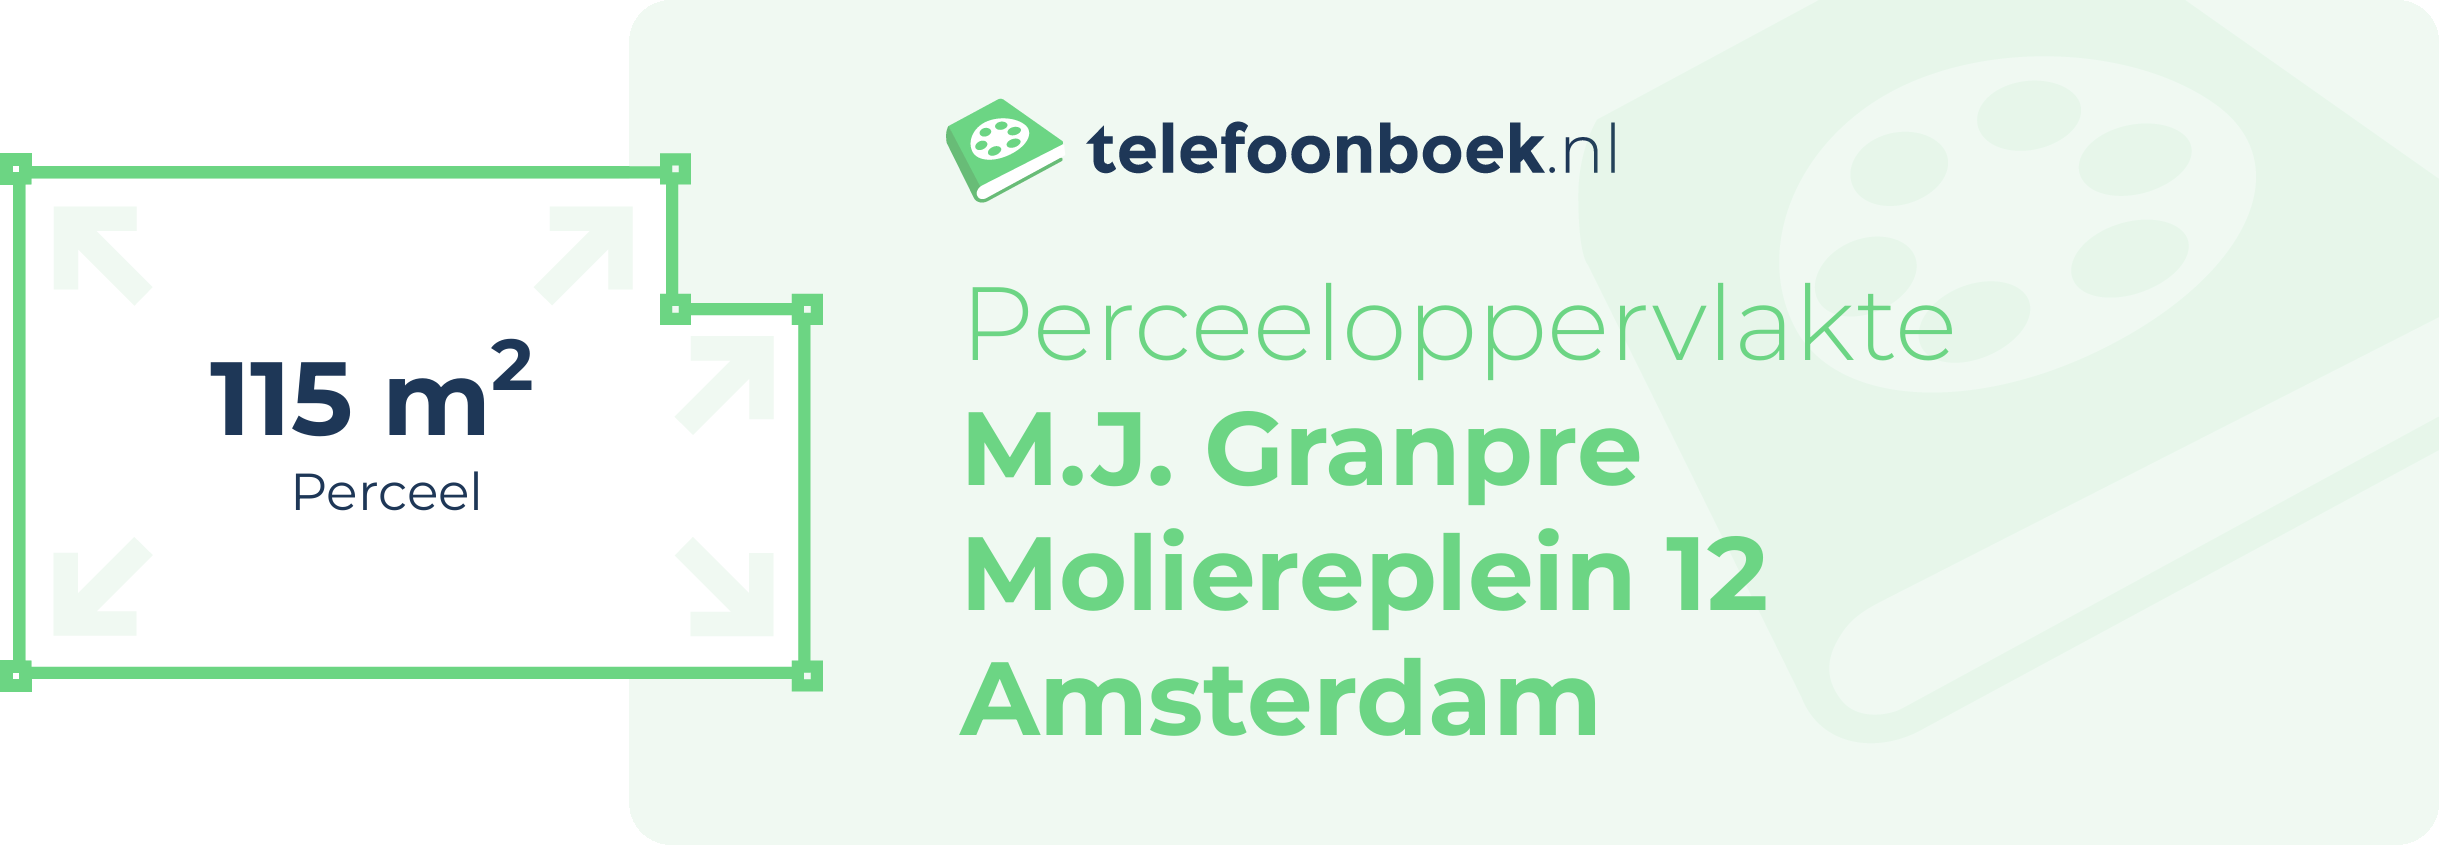 Perceeloppervlakte M.J. Granpre Moliereplein 12 Amsterdam